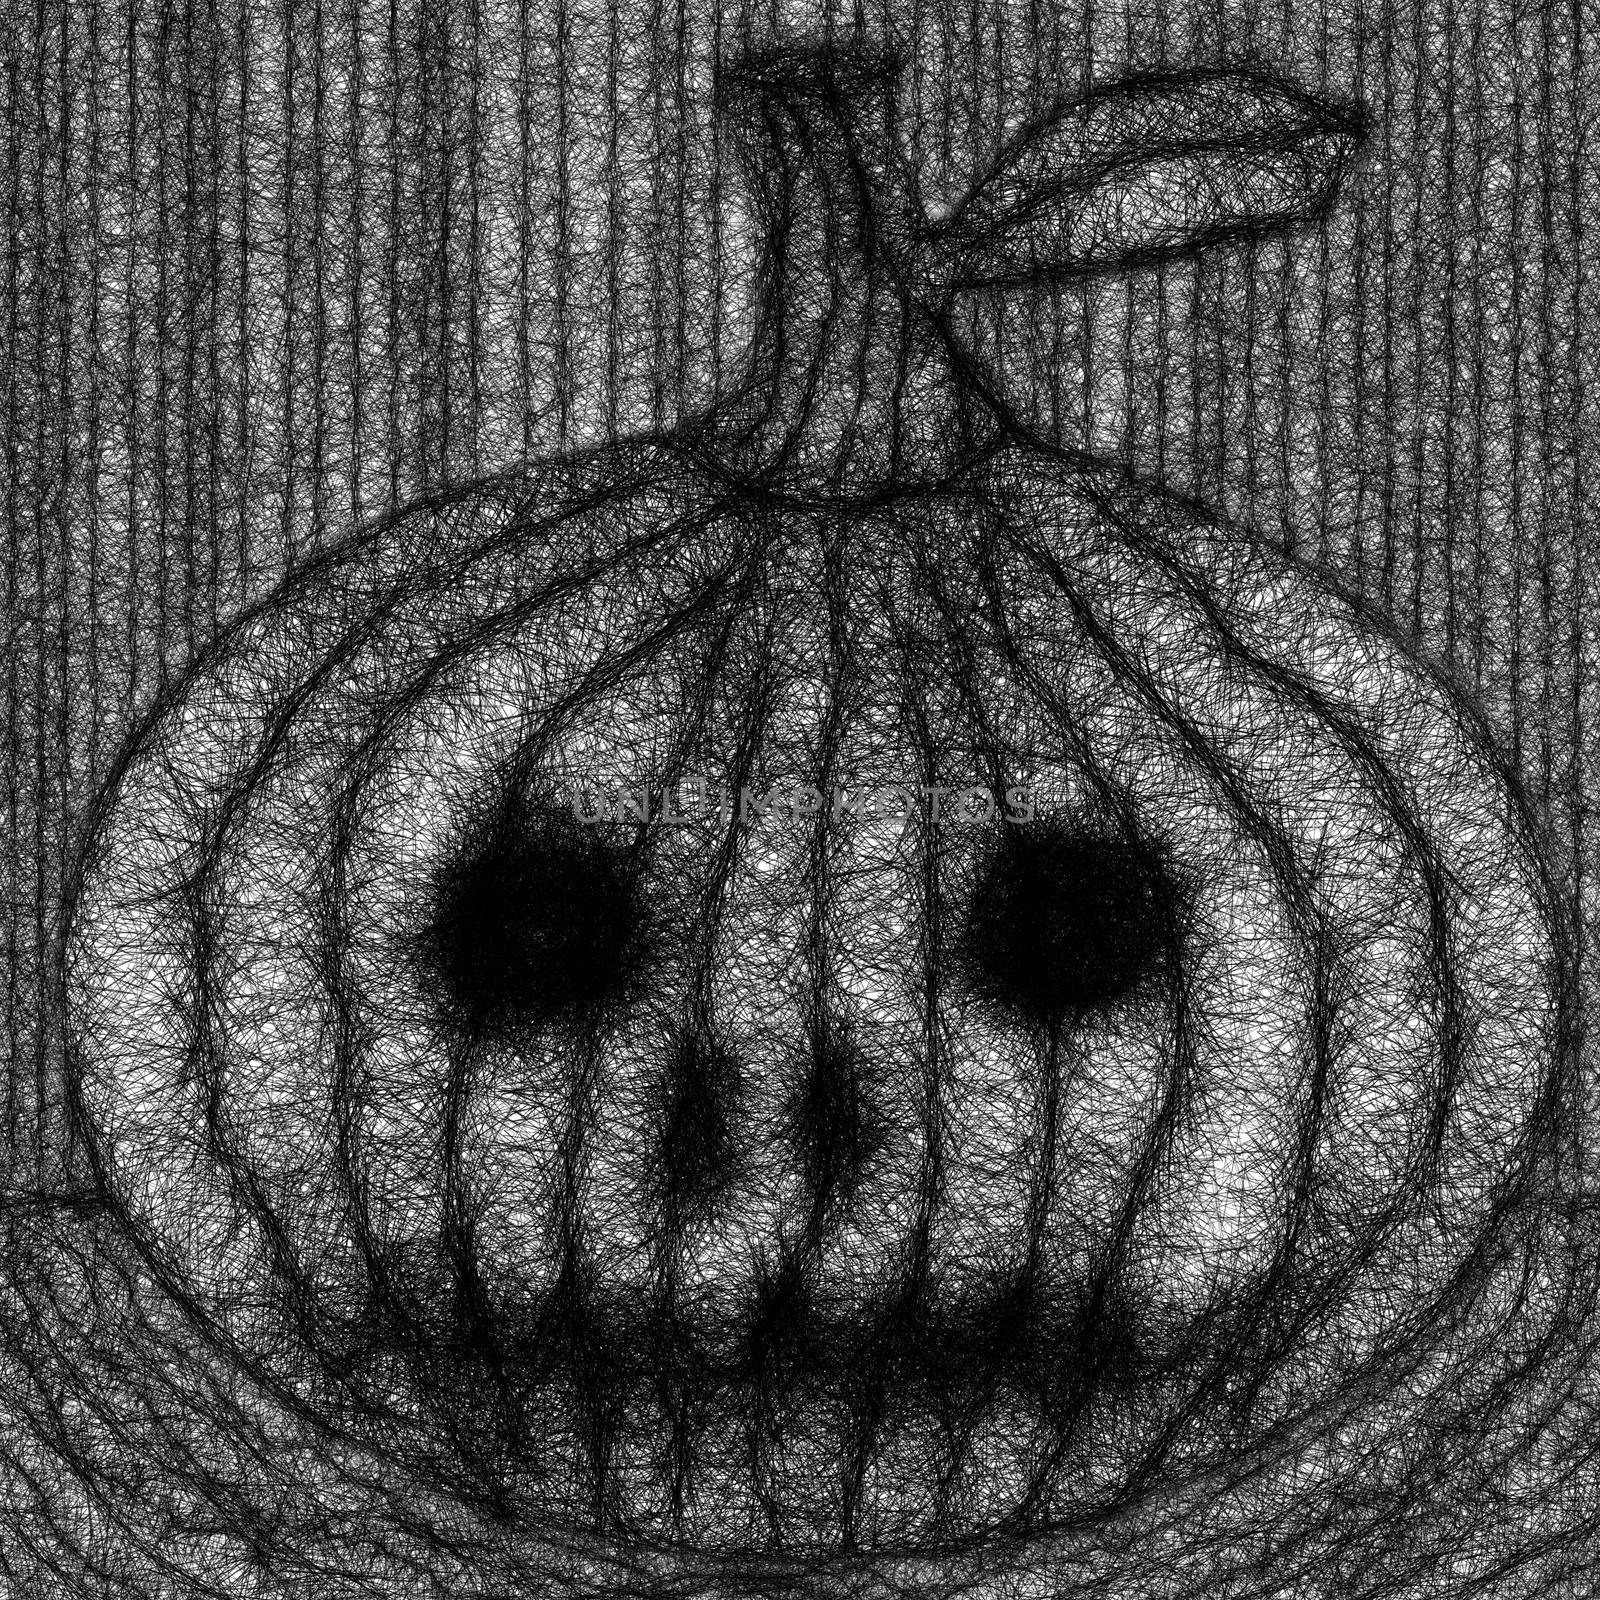 Head of Jack Lantern, halloween pumpkin, digital painting.